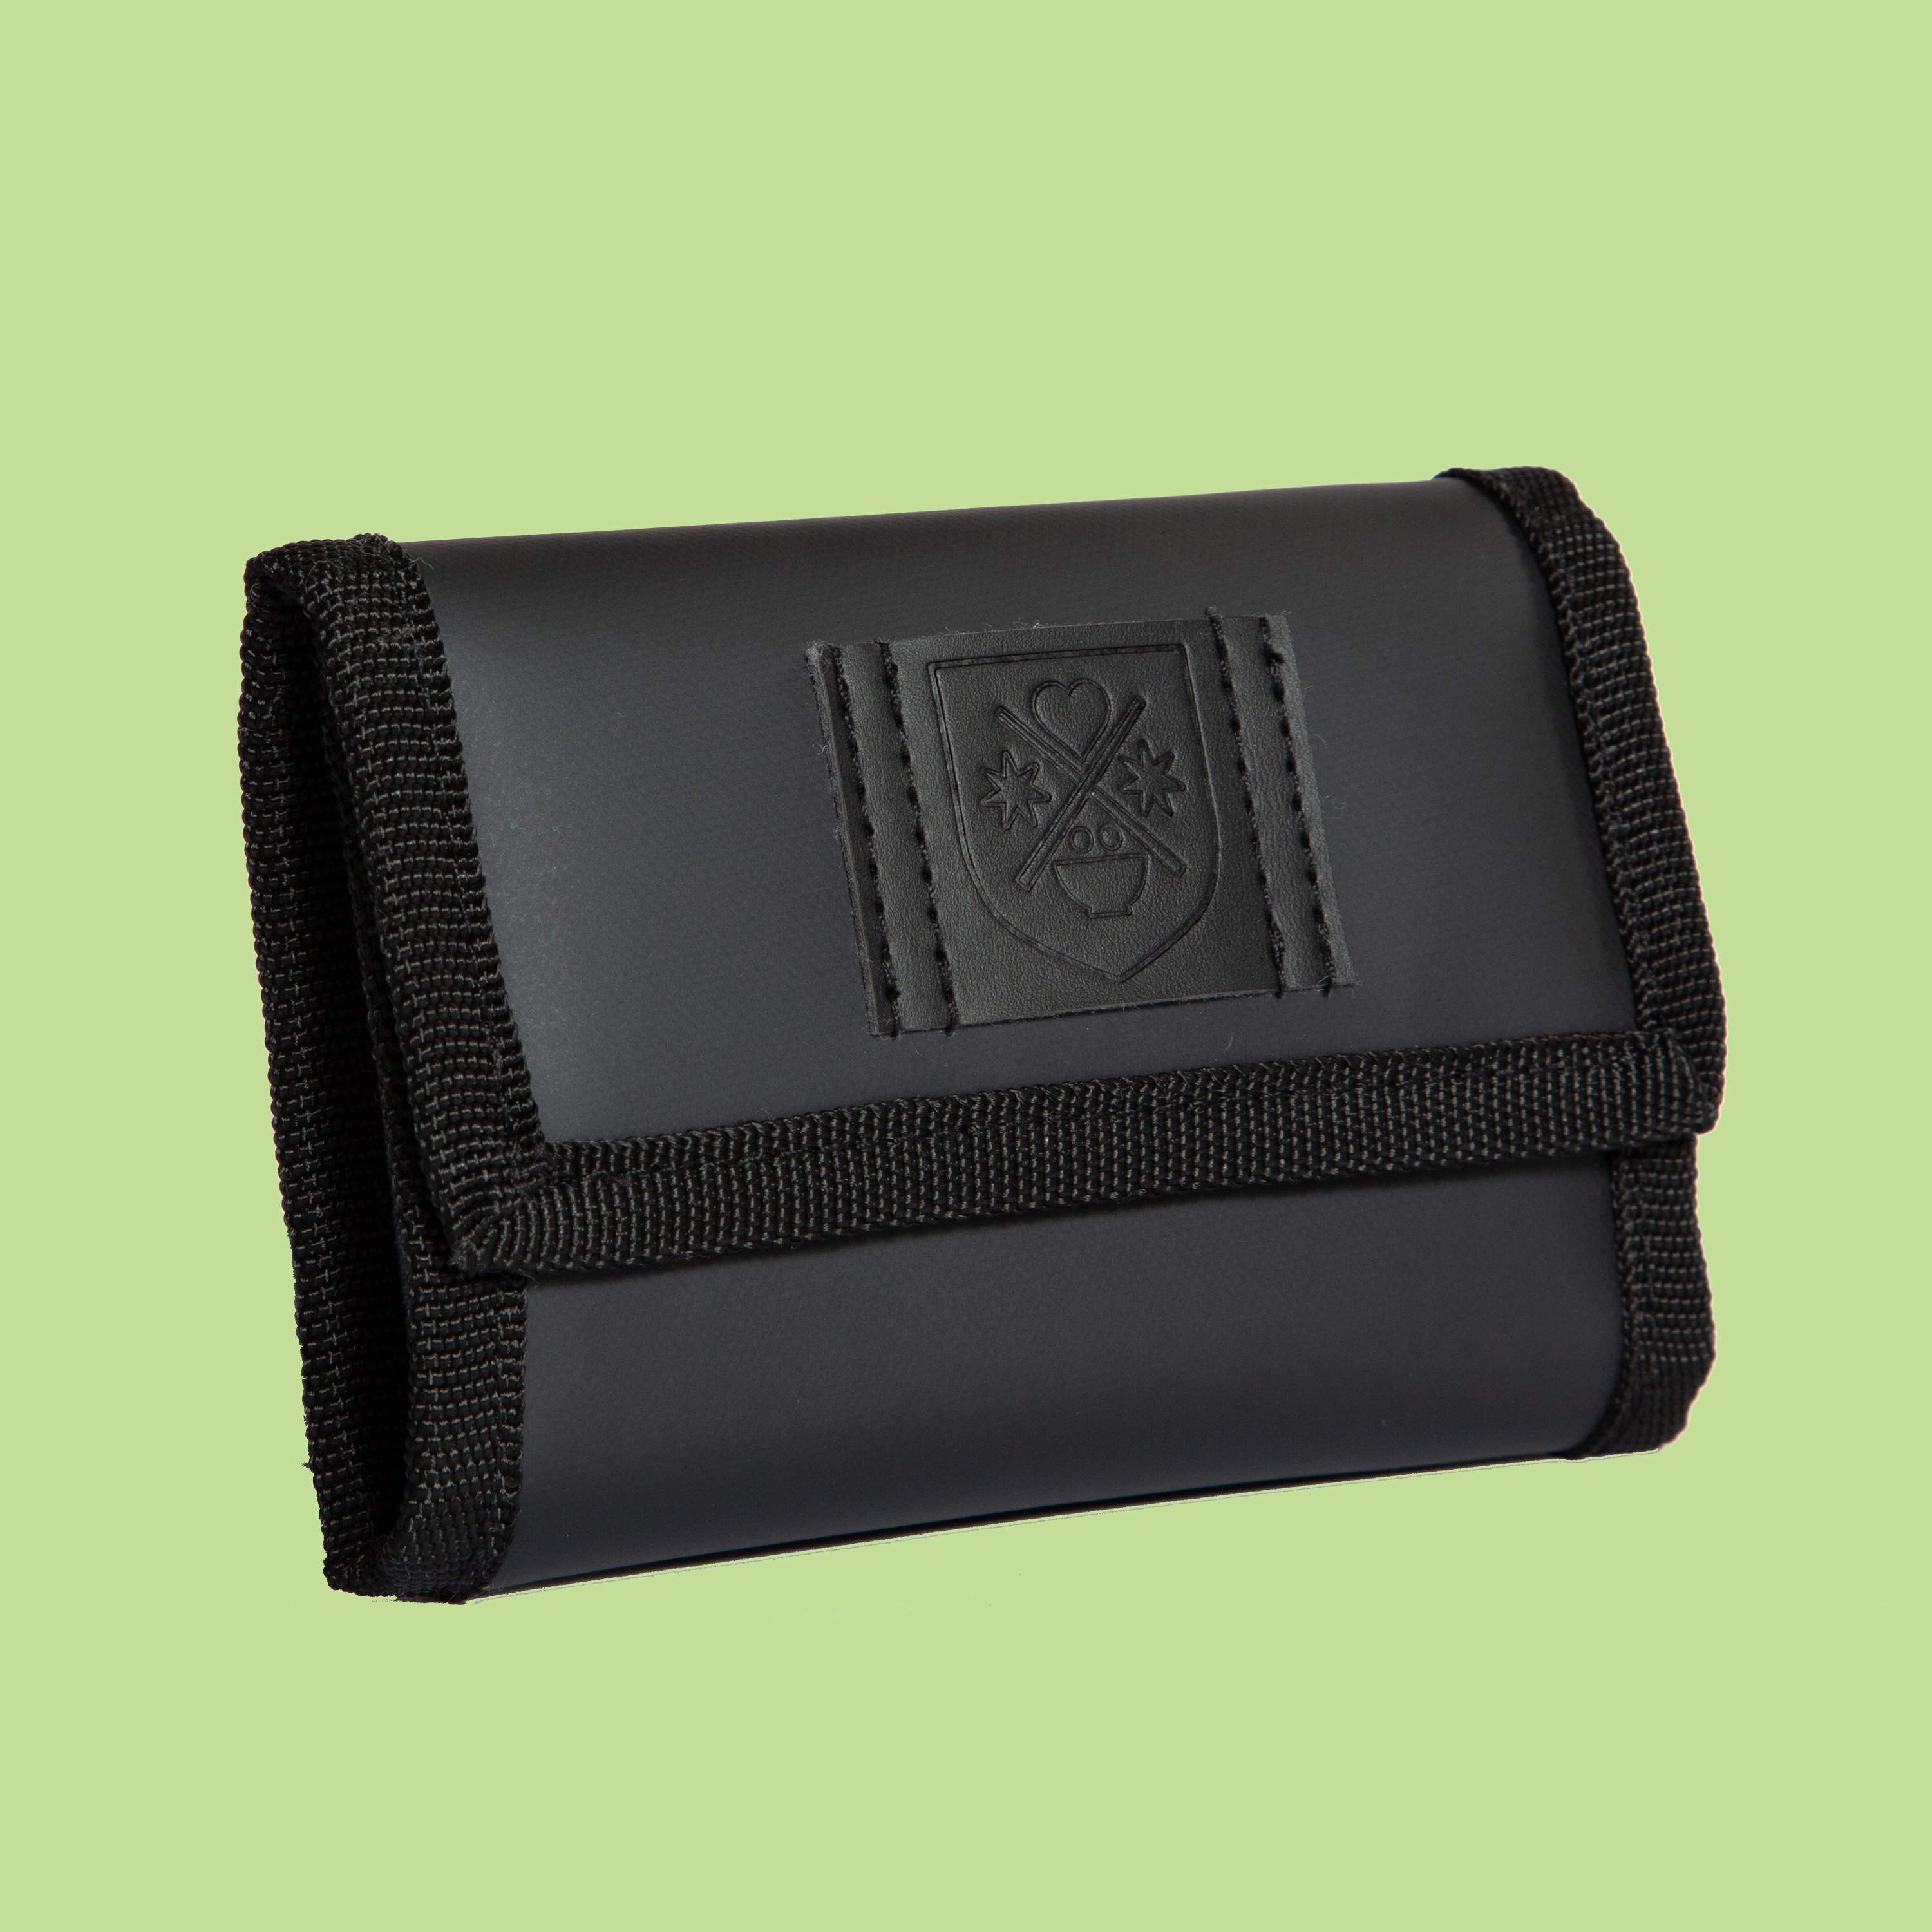 Monochrome wallet